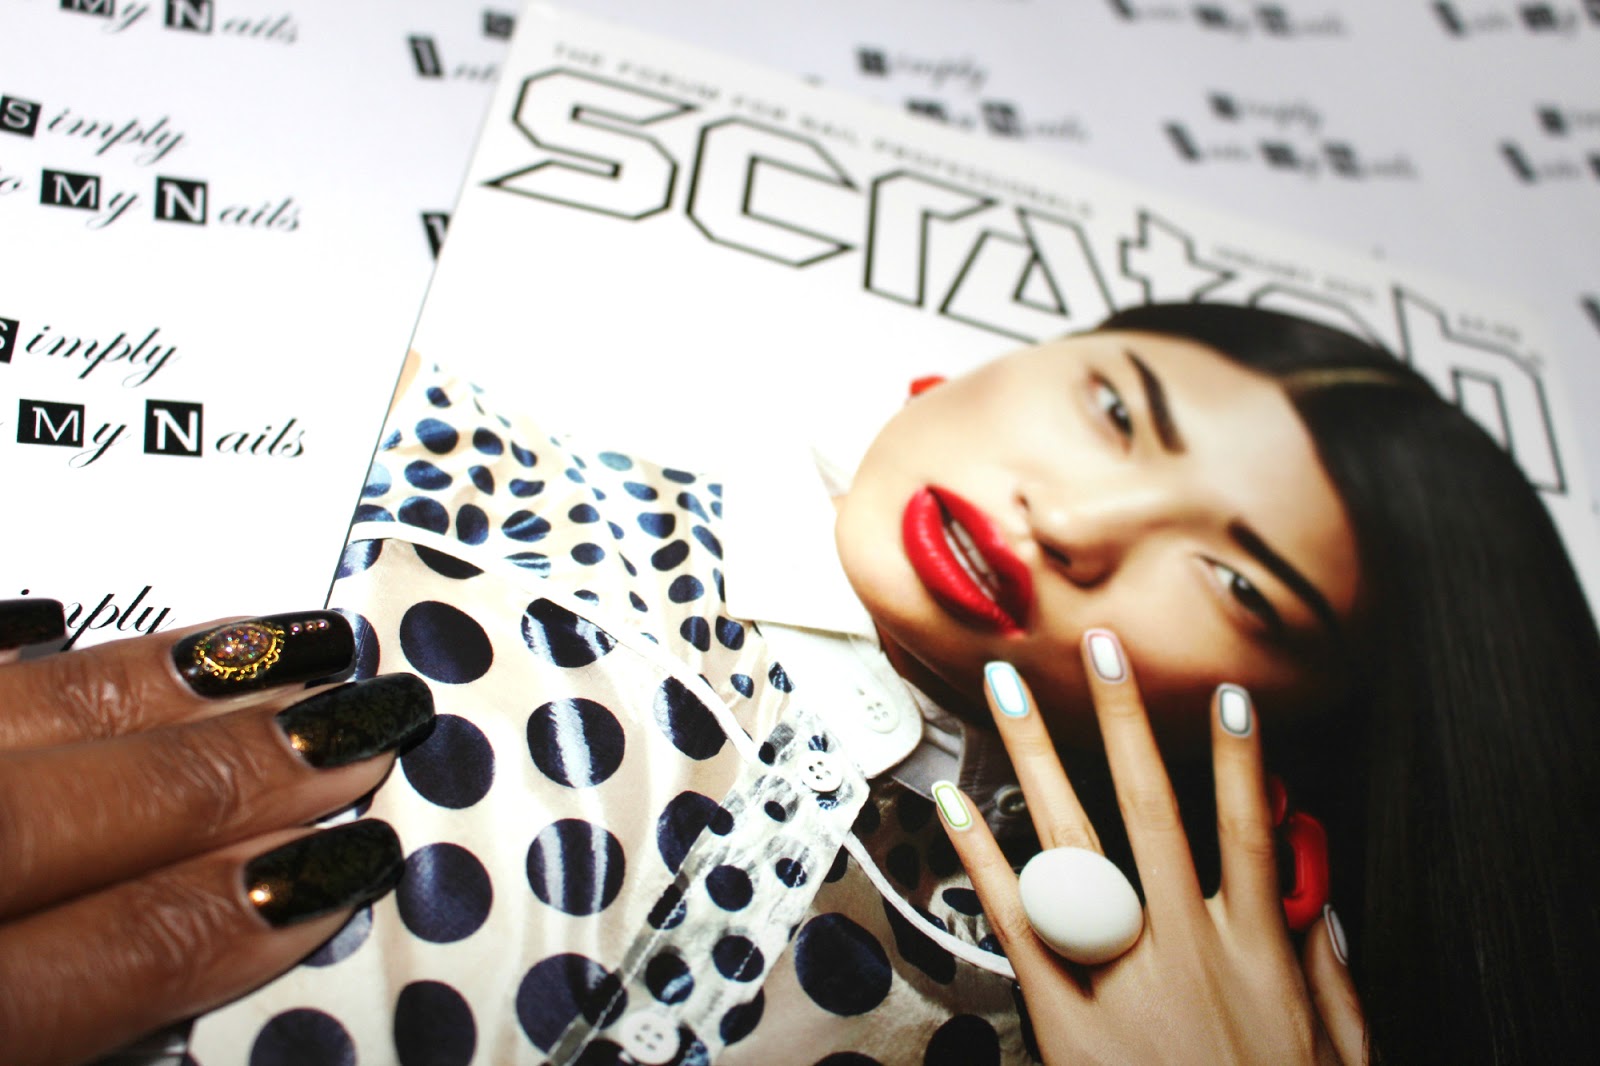 scratch nail art magazine